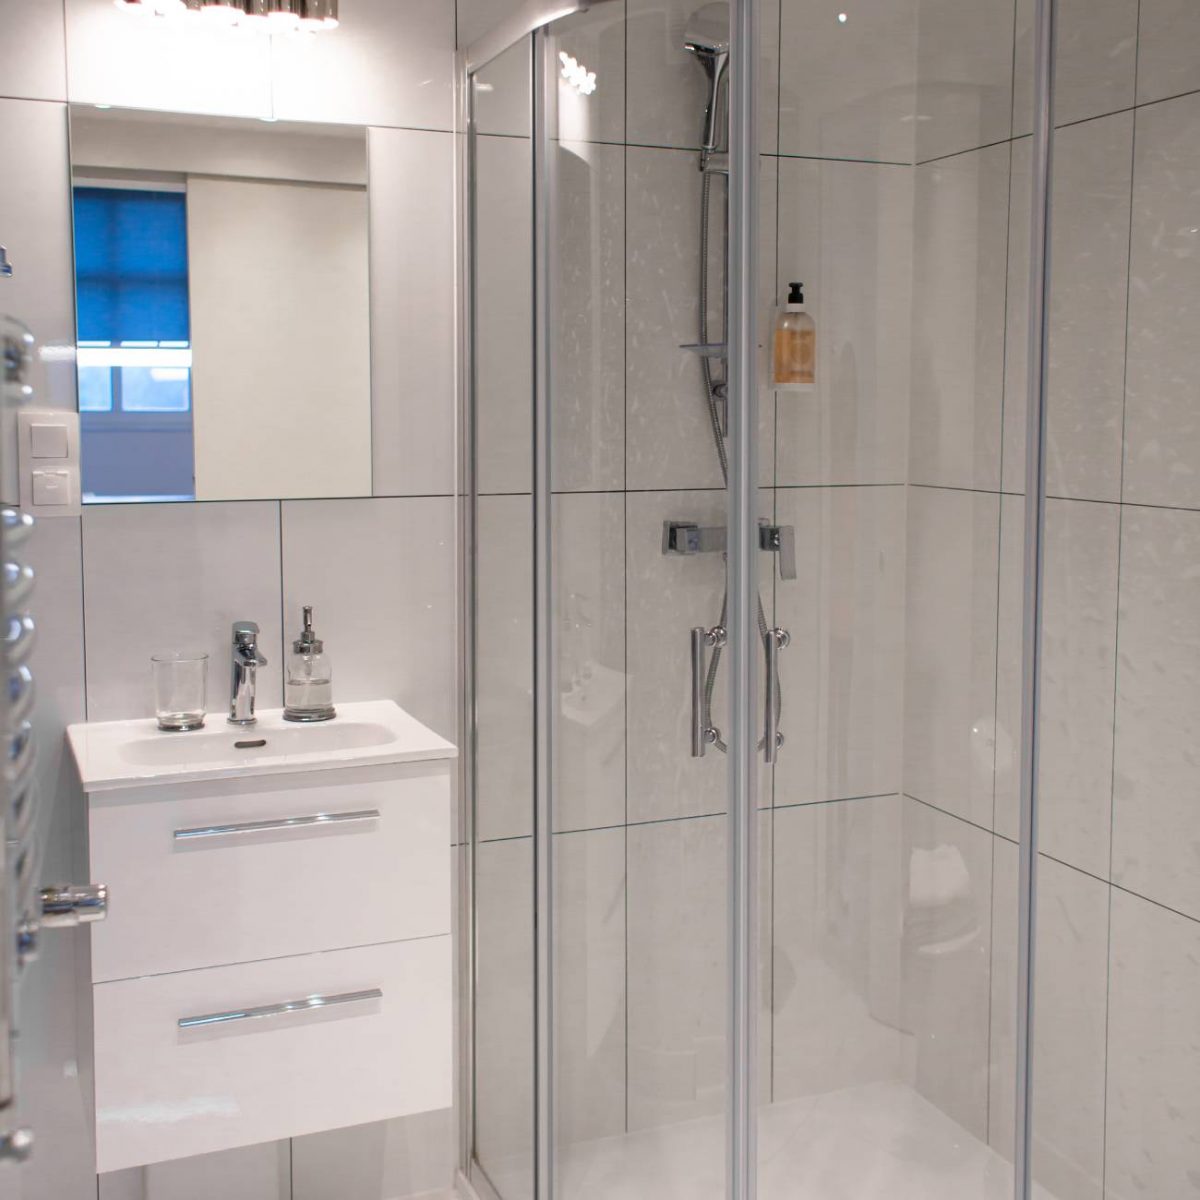 clean modern bathroom with glass shower doors